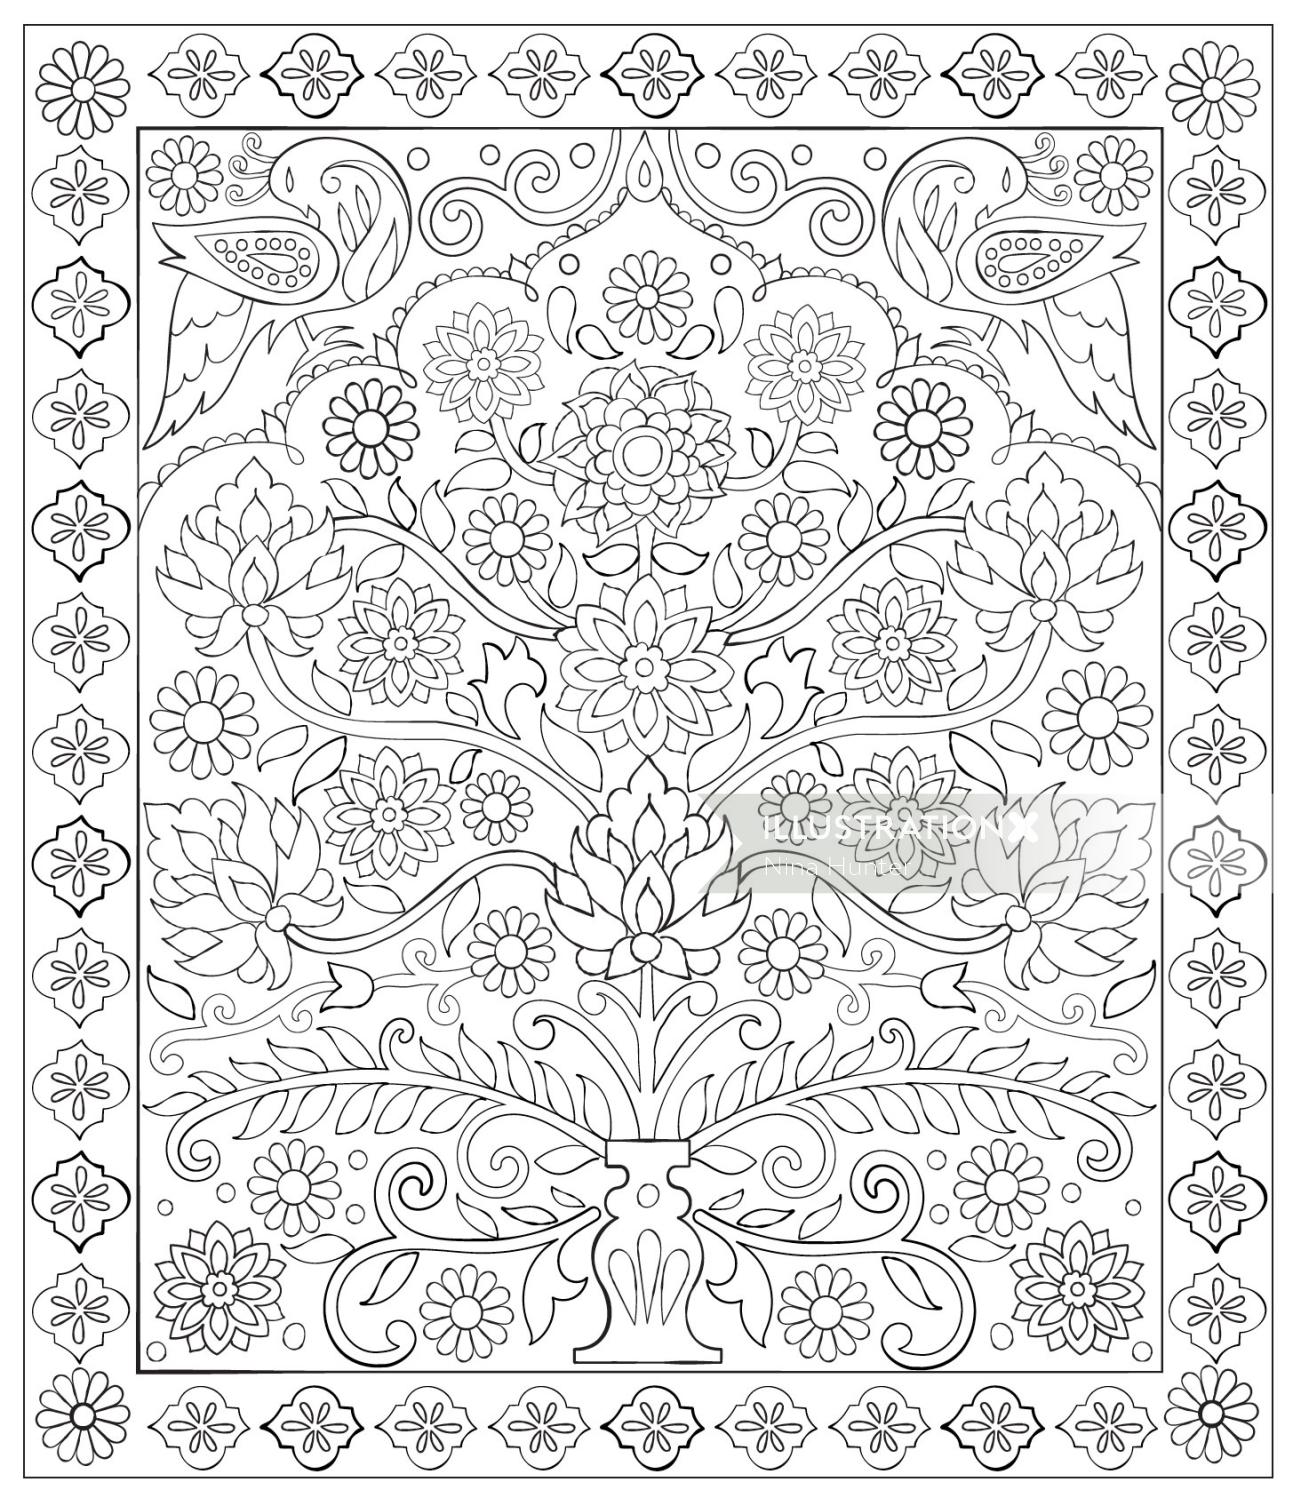 Graphic Black and white Design pattern